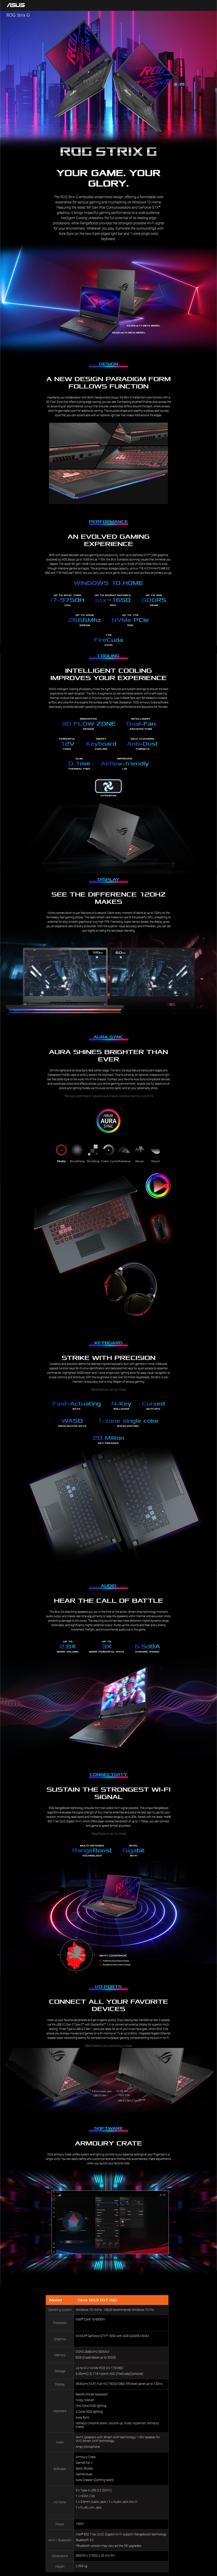 Buy Online Asus ROG Strix G731GT-AU041T 17.3inch 60Hz Gaming Laptop (Core i5-9300H, 8GB, 512GB SSD, GTX 1650 4GB, Windows 10 Home)